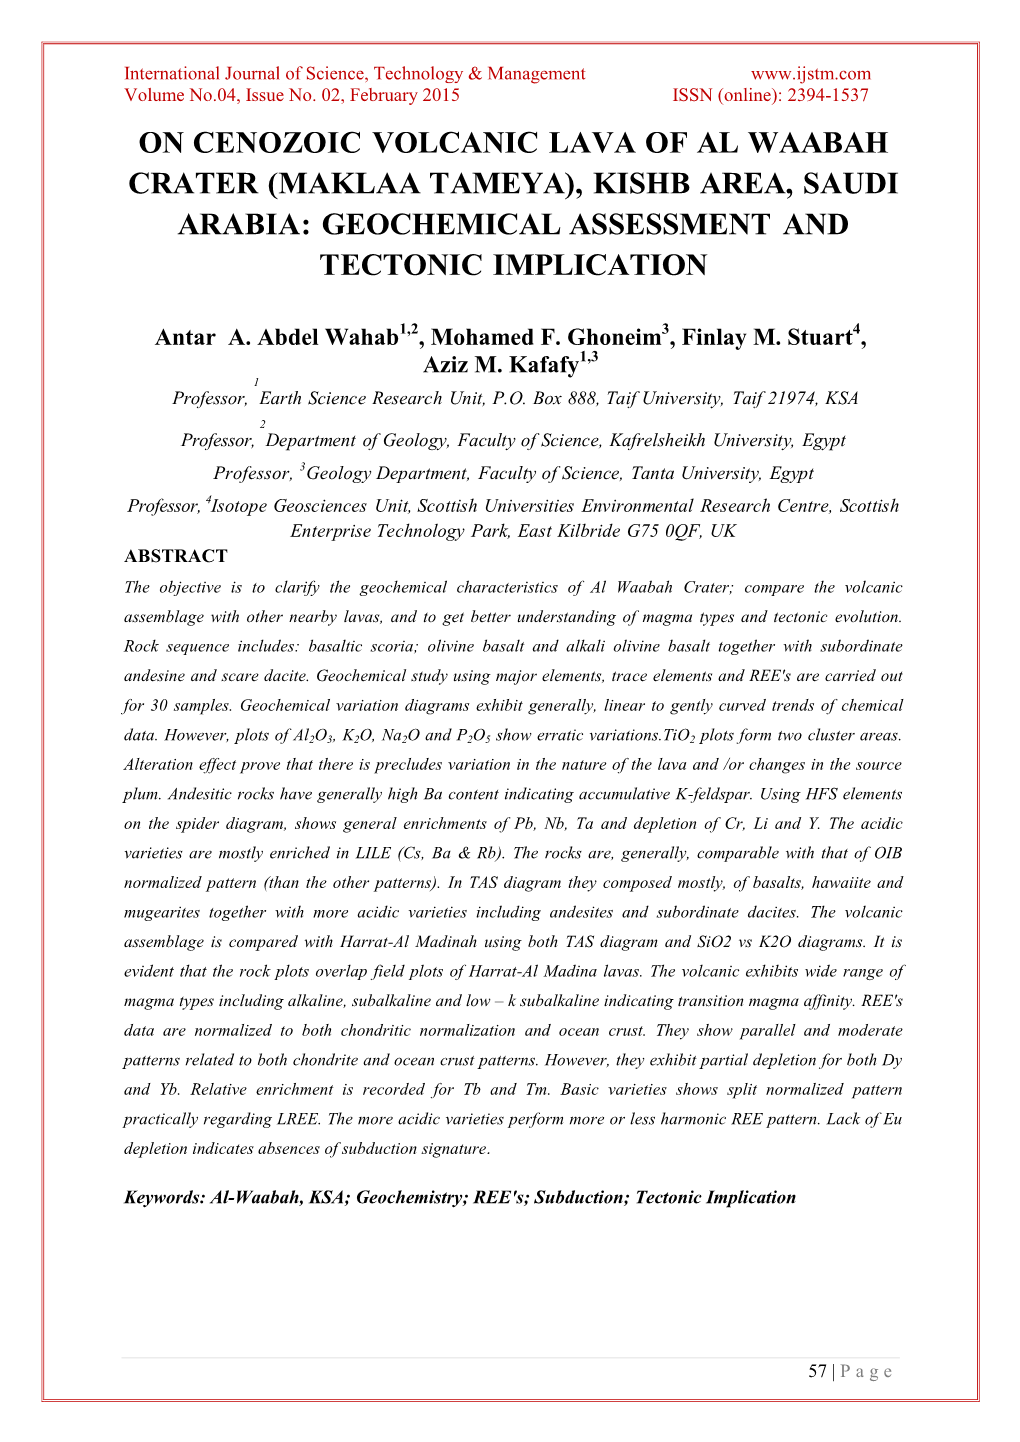 Maklaa Tameya), Kishb Area, Saudi Arabia: Geochemical Assessment and Tectonic Implication